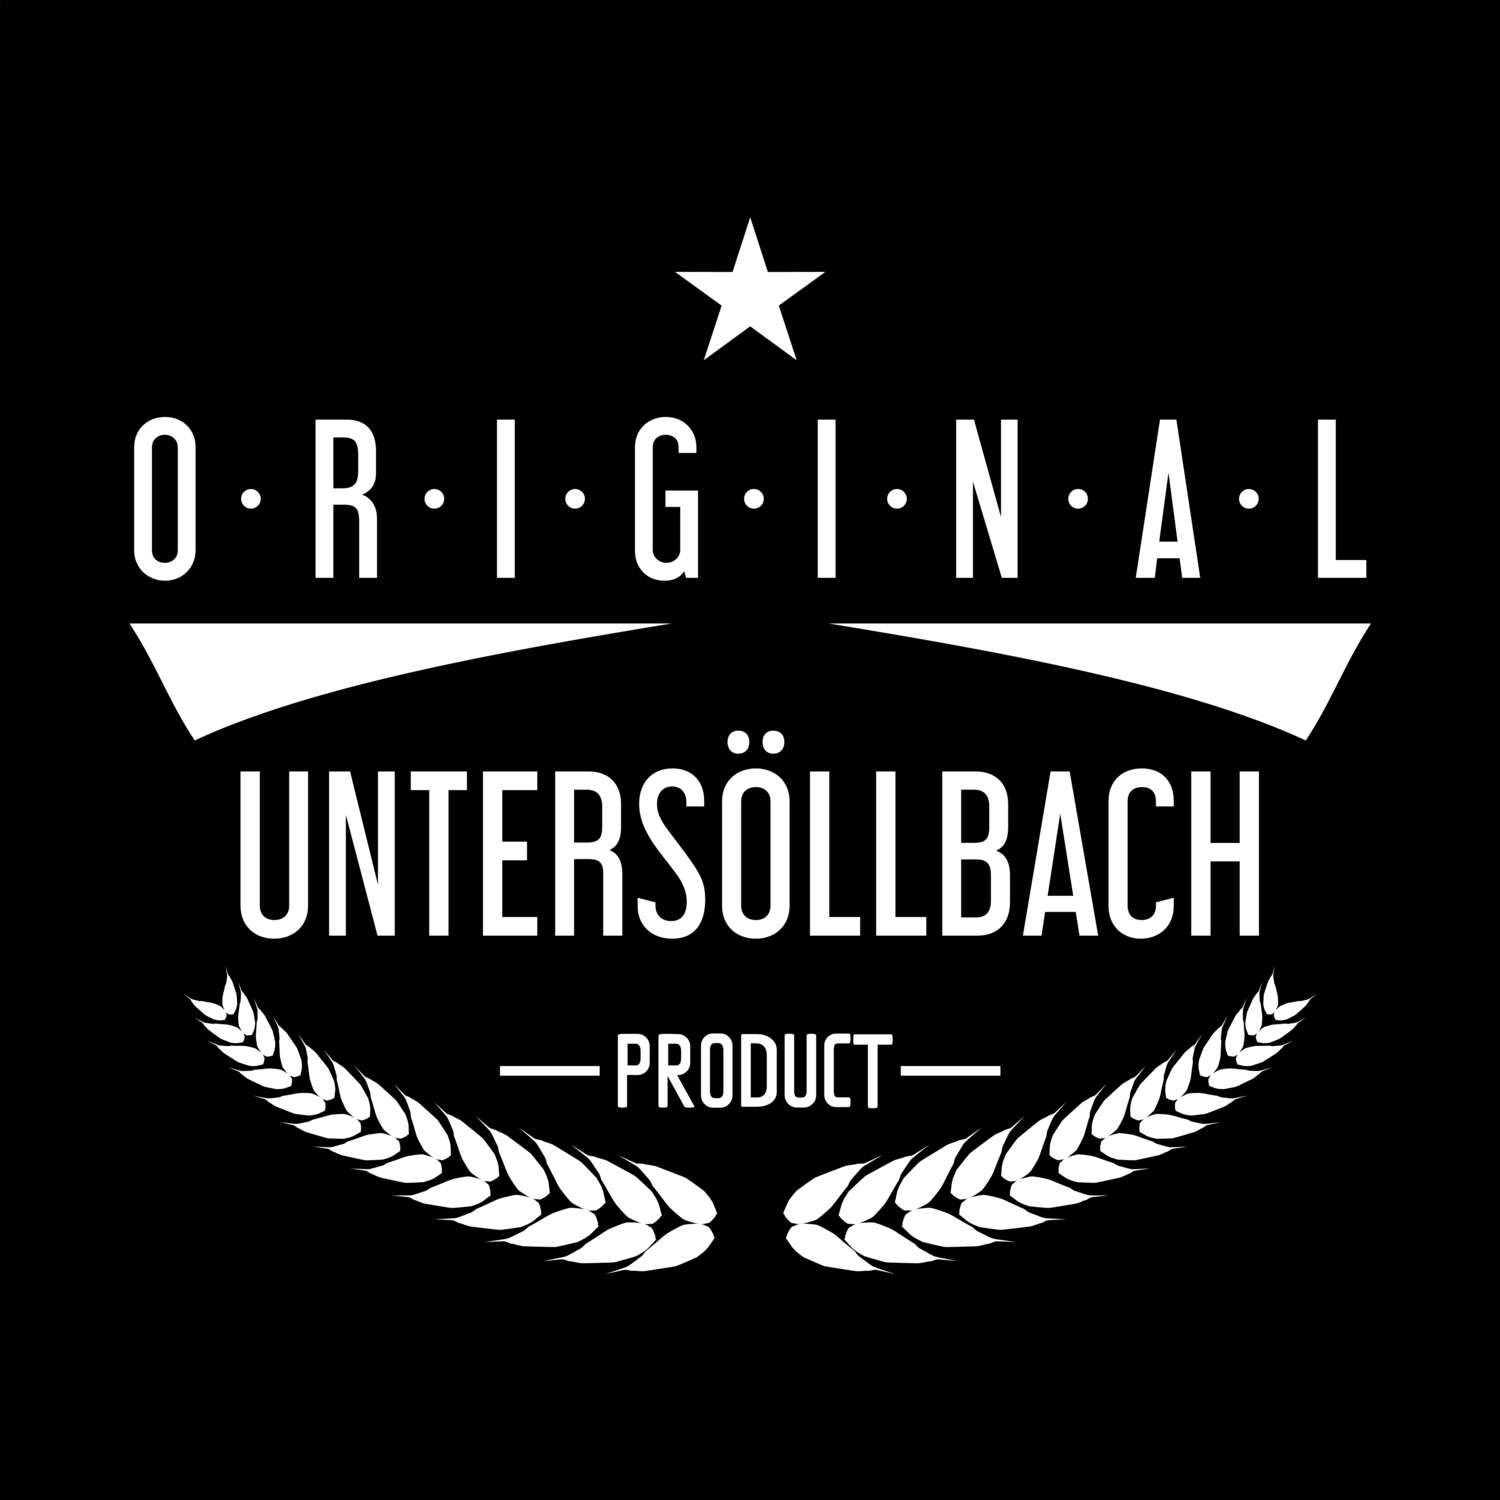 Untersöllbach T-Shirt »Original Product«